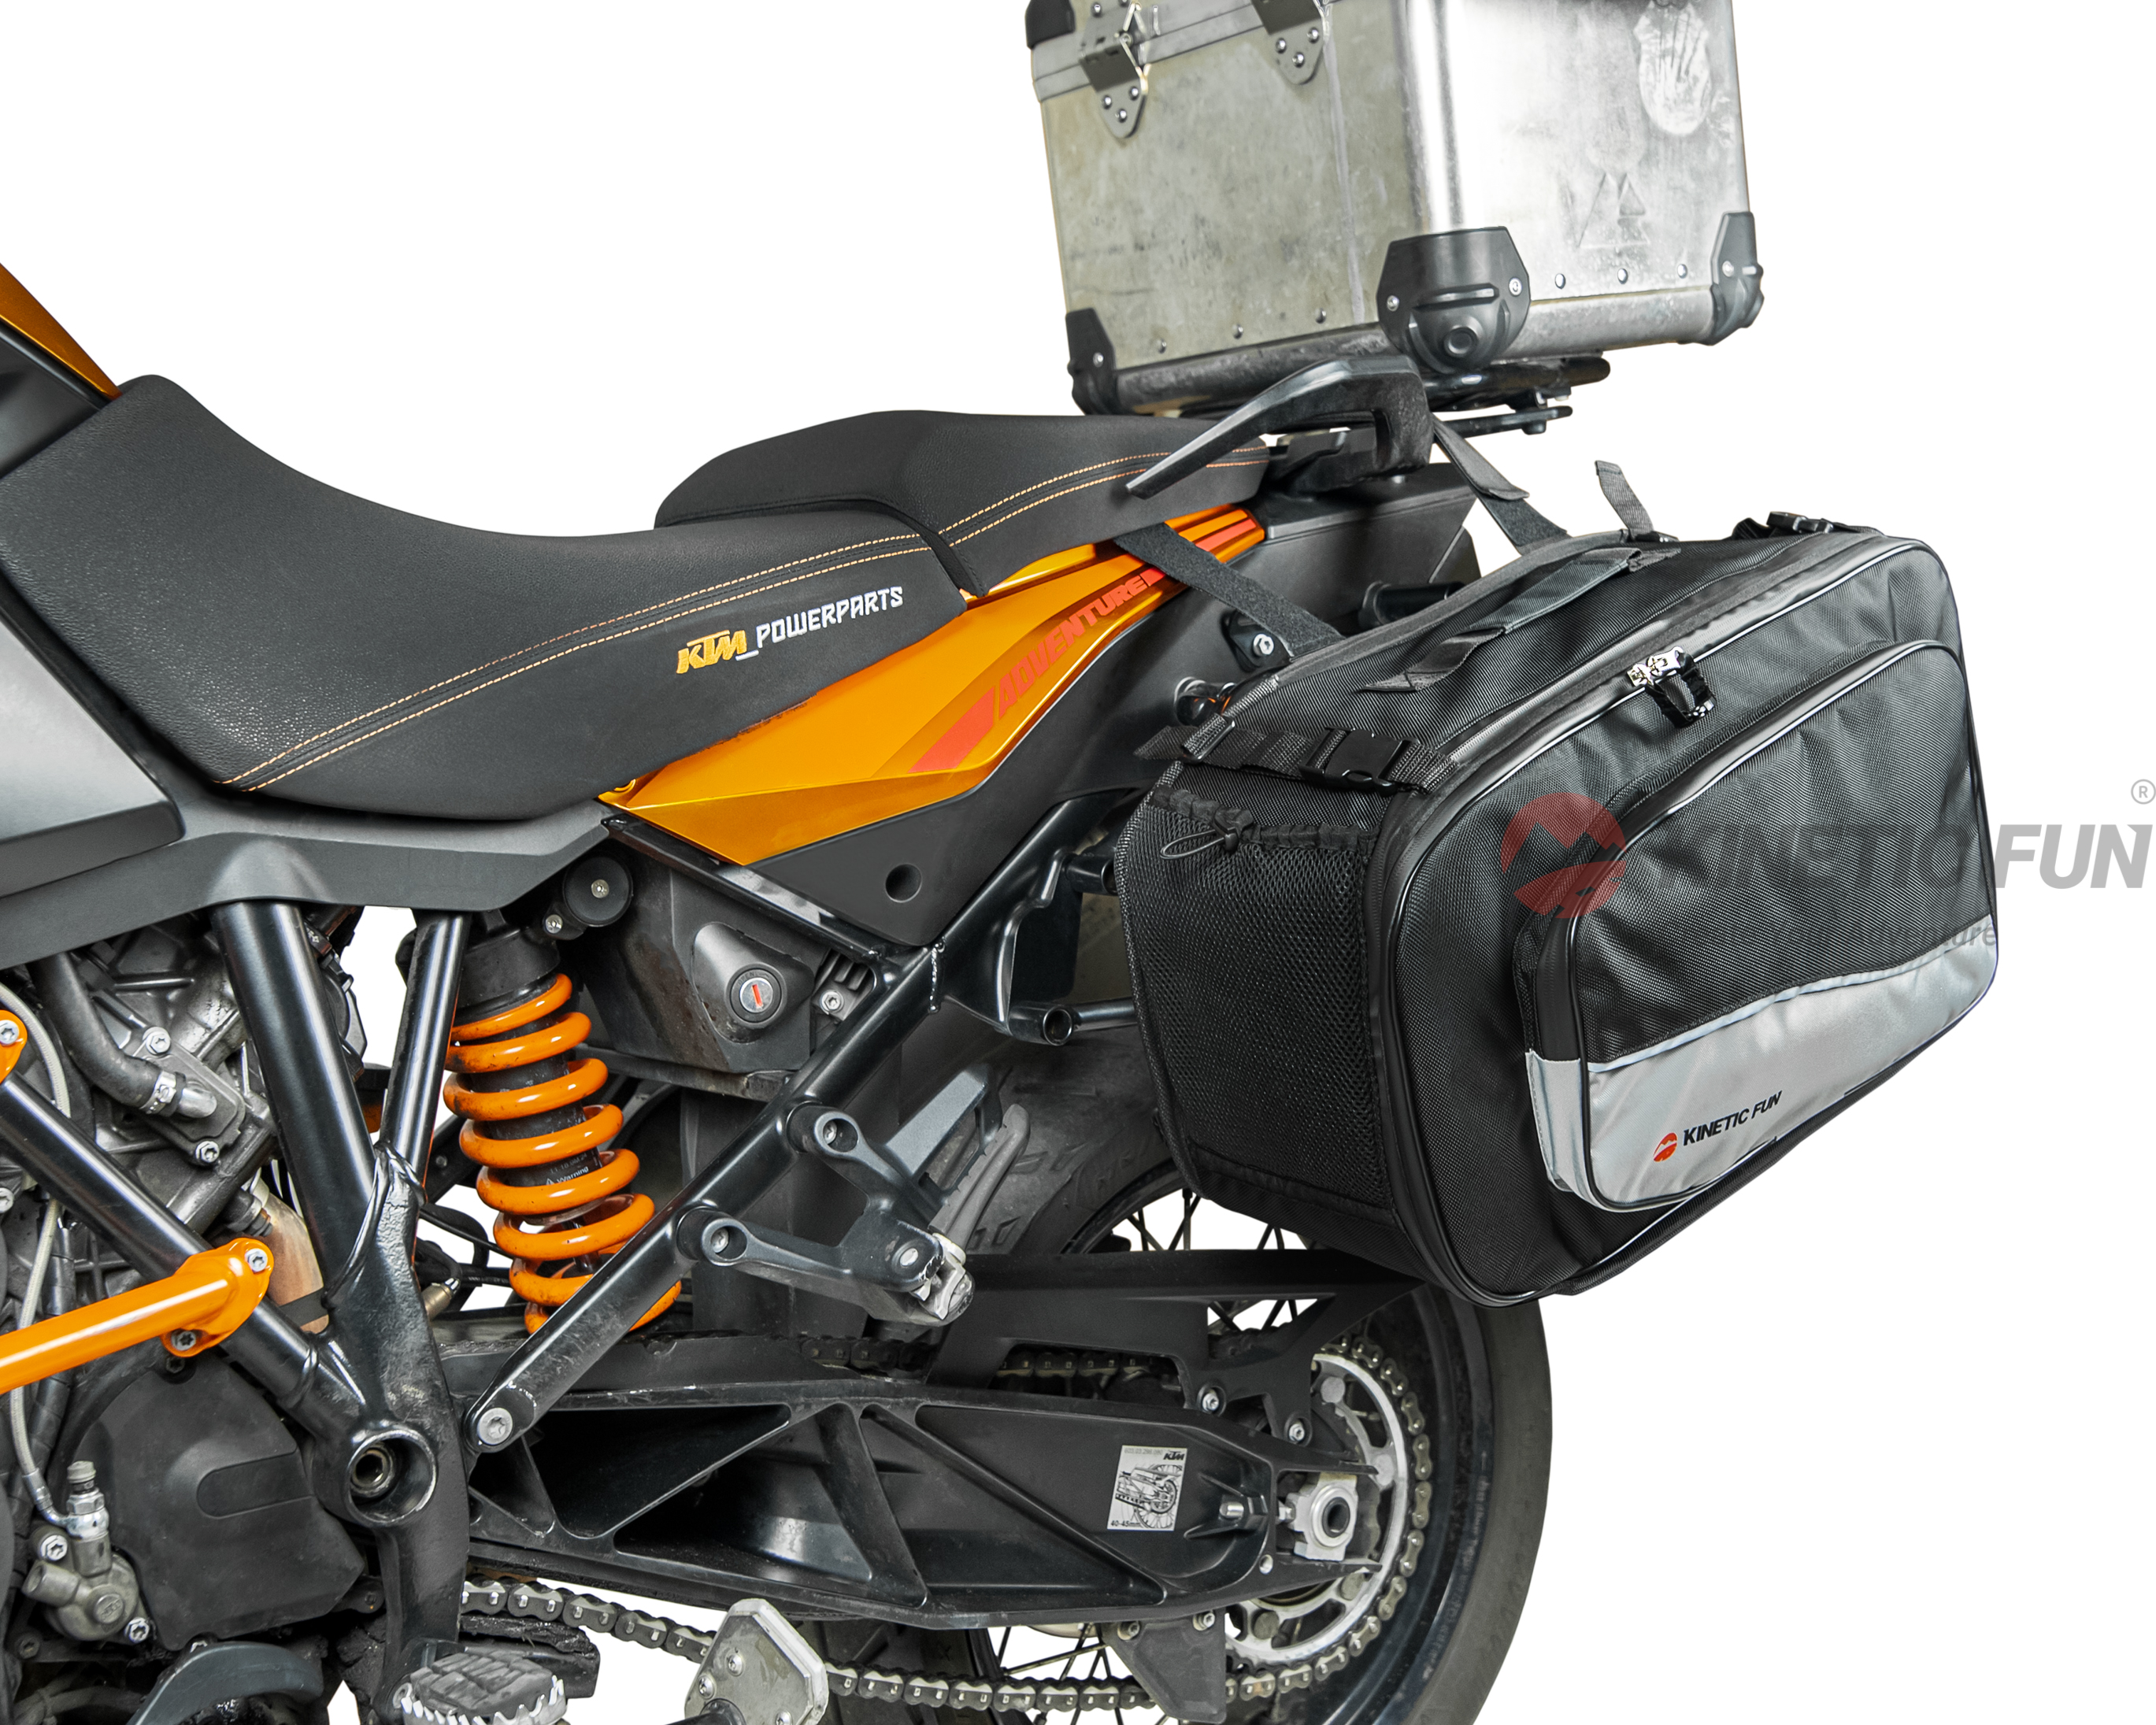 Сумки для мотоцикла Aprilia боковые - Модель: XL Evo (пара), объём 46-68 литров